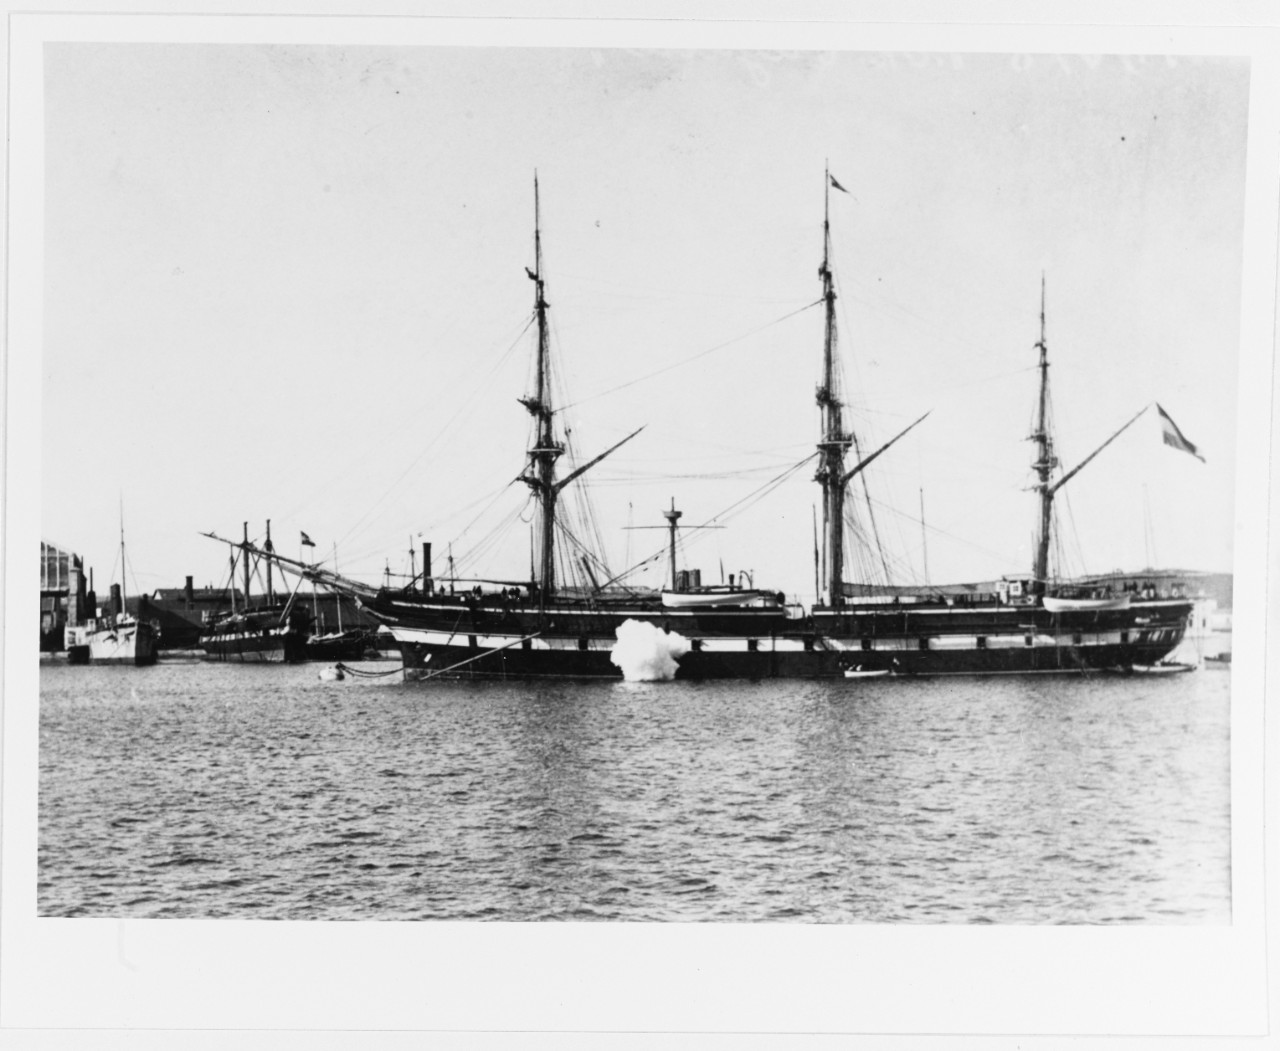 LAUDON (Austrian steam frigate, 1873-1923)